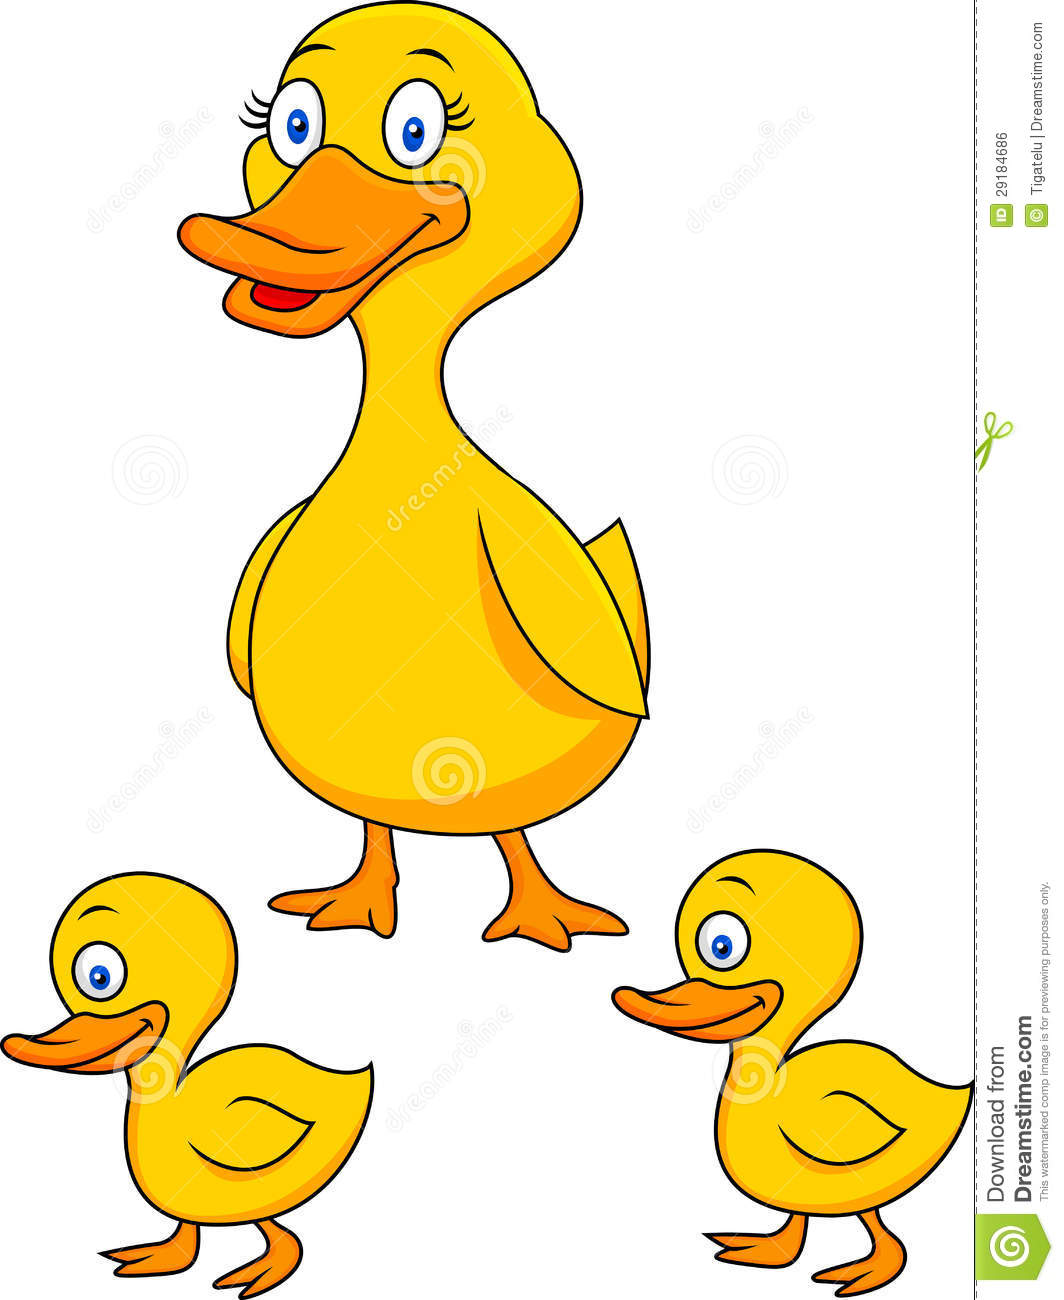 Duck Cartoon Family Royalty Free Stock Image   Image  29184686